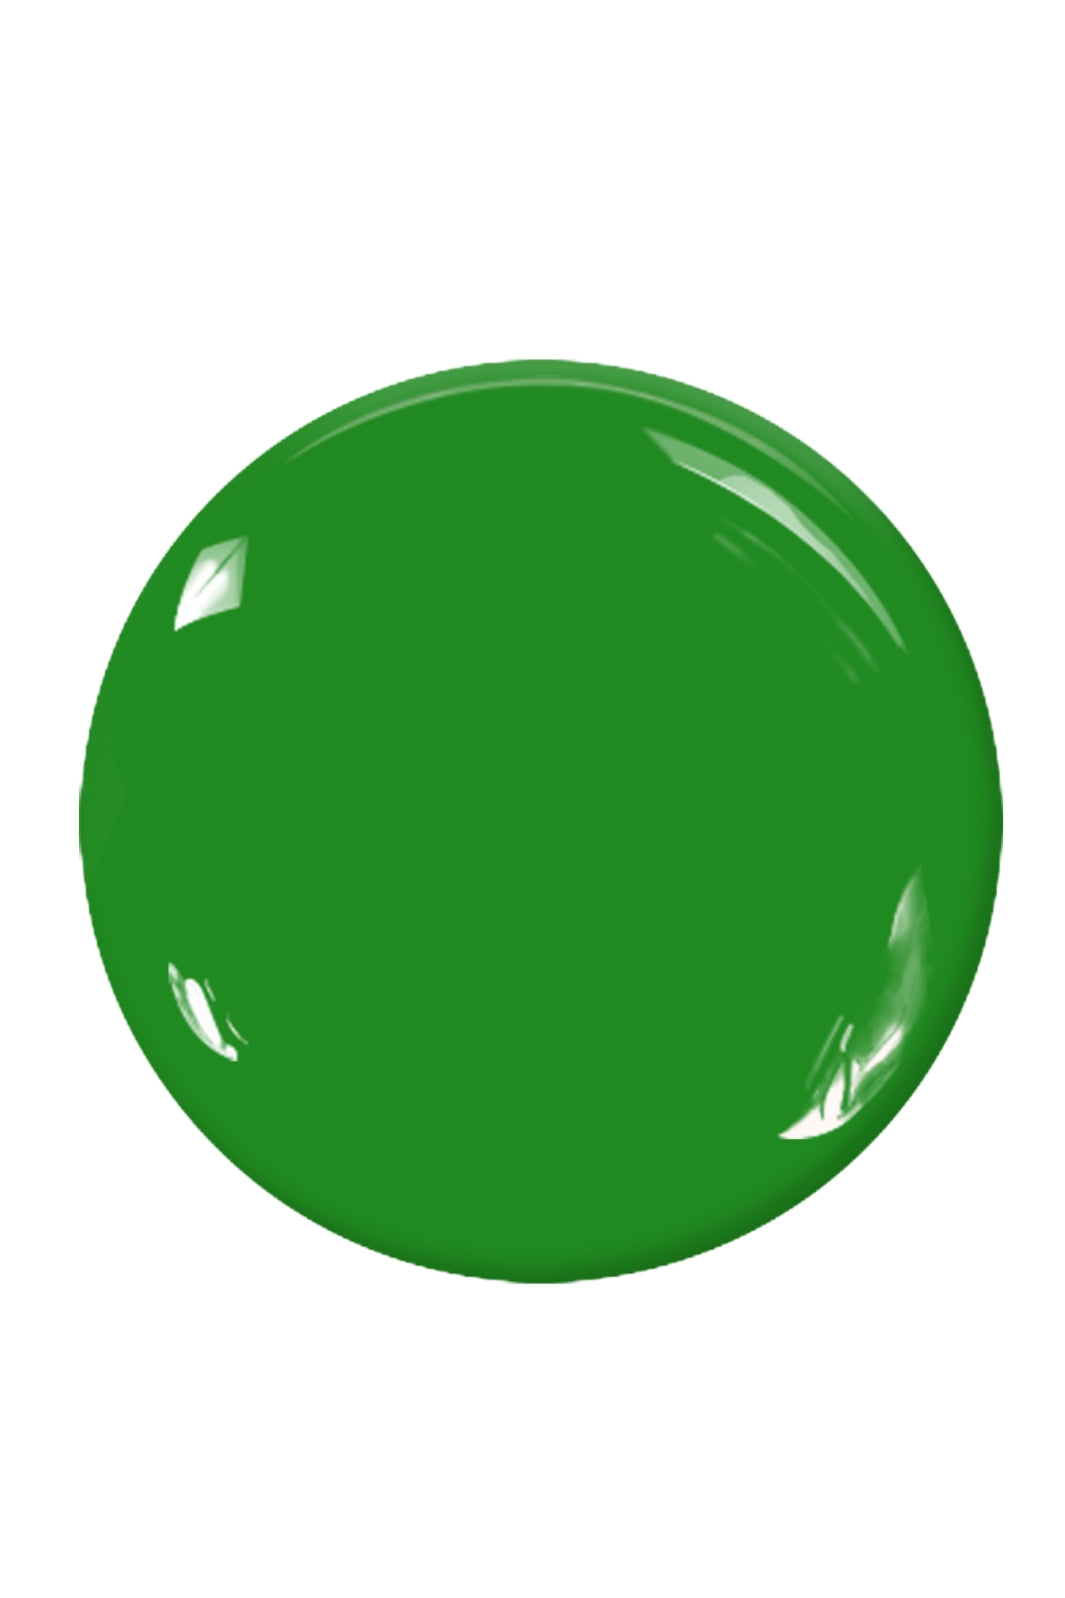 Le Mini Marcaron - Neglelak Gel- Ever Green Nail Polishes 